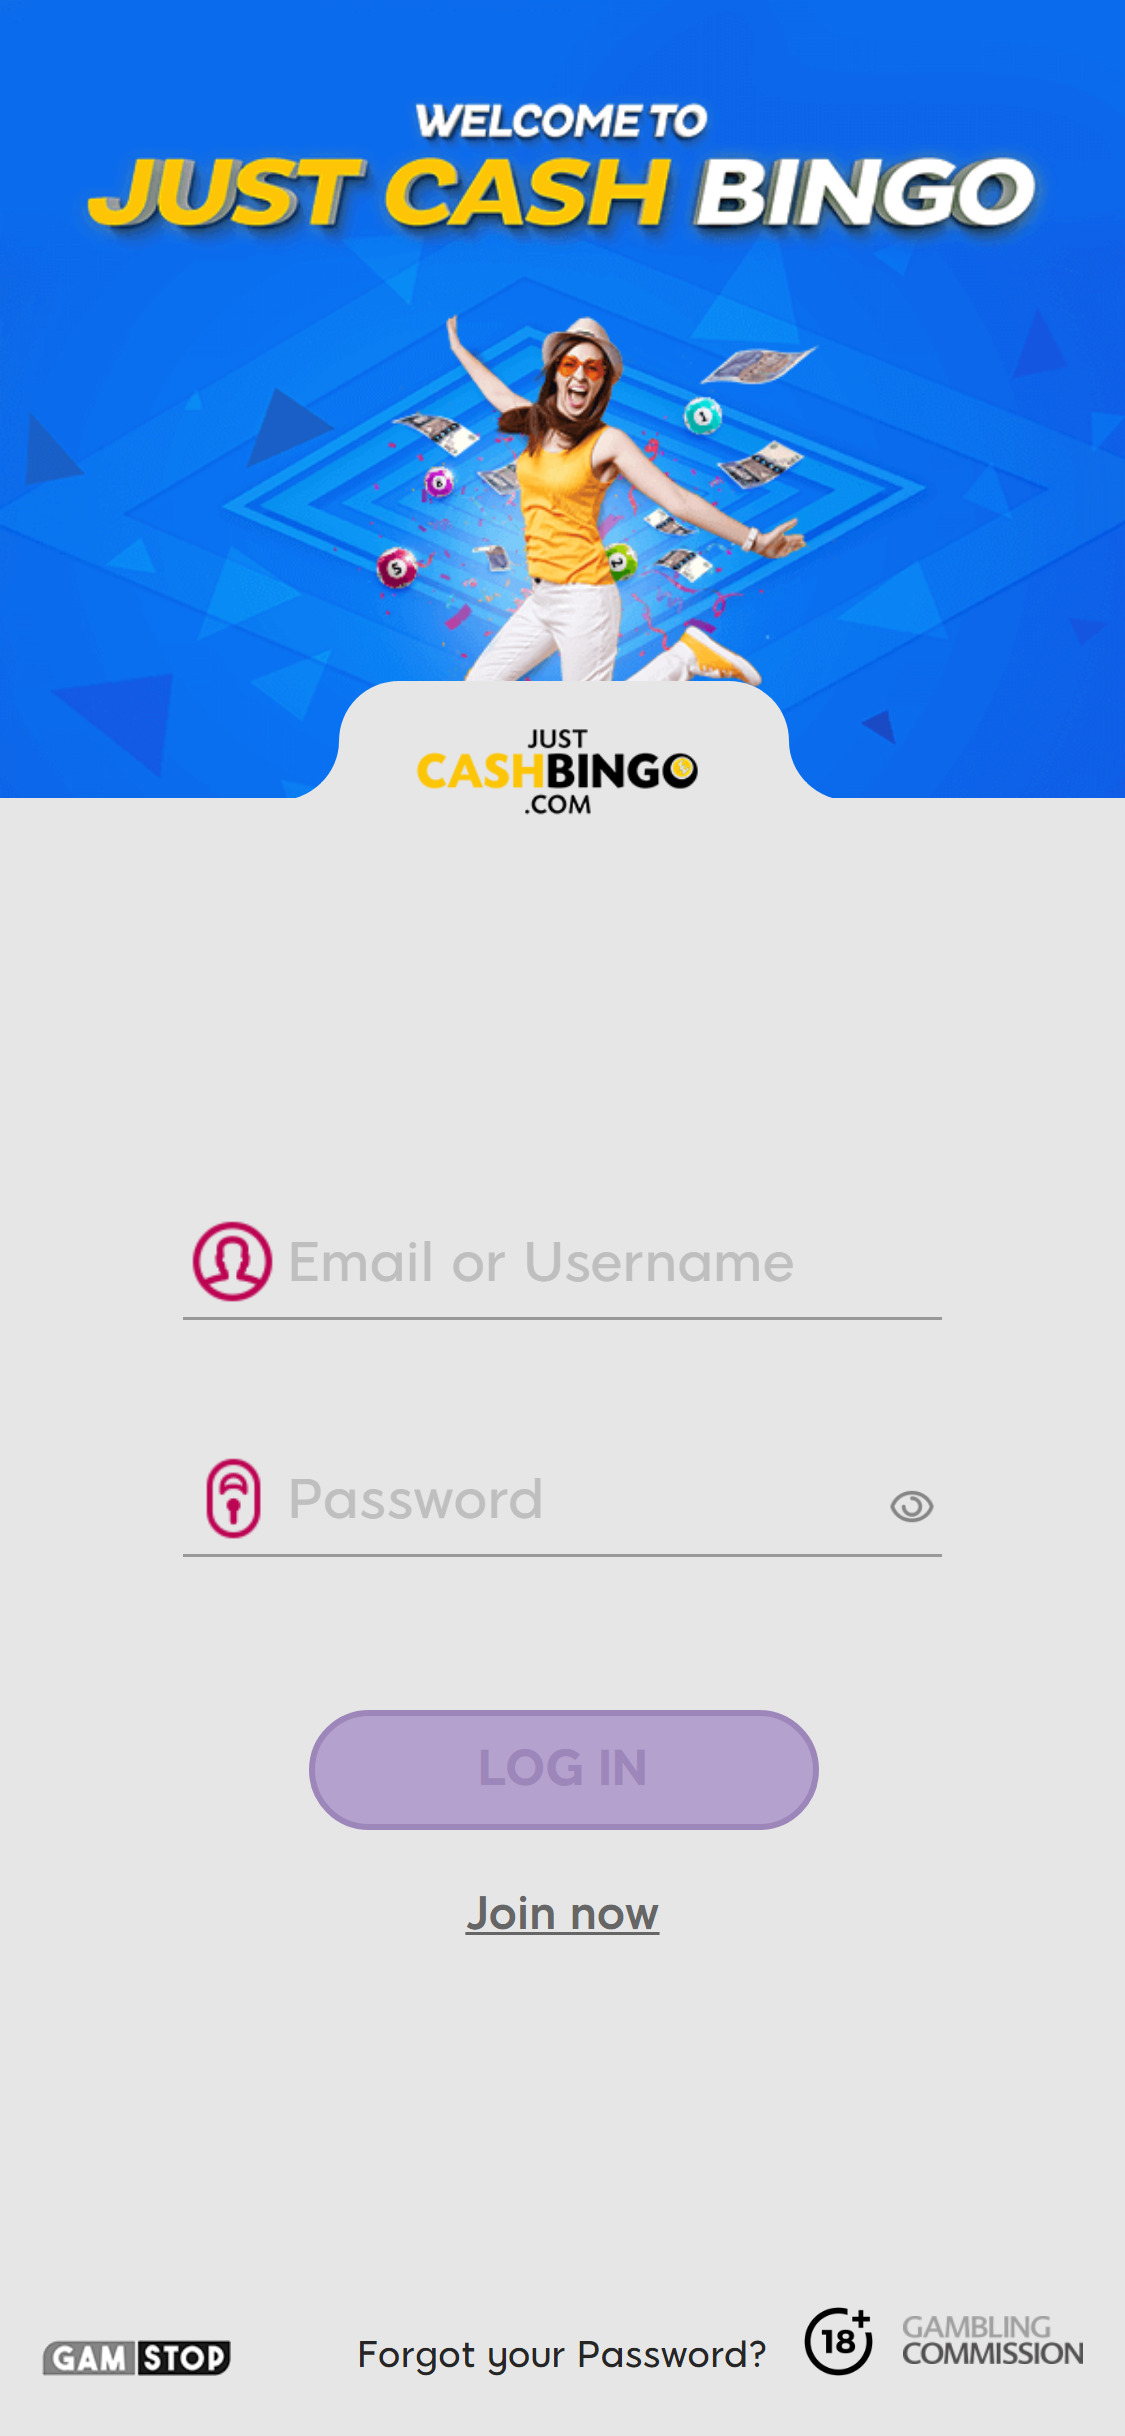 Just Cash Bingo Casino Mobile Login Review